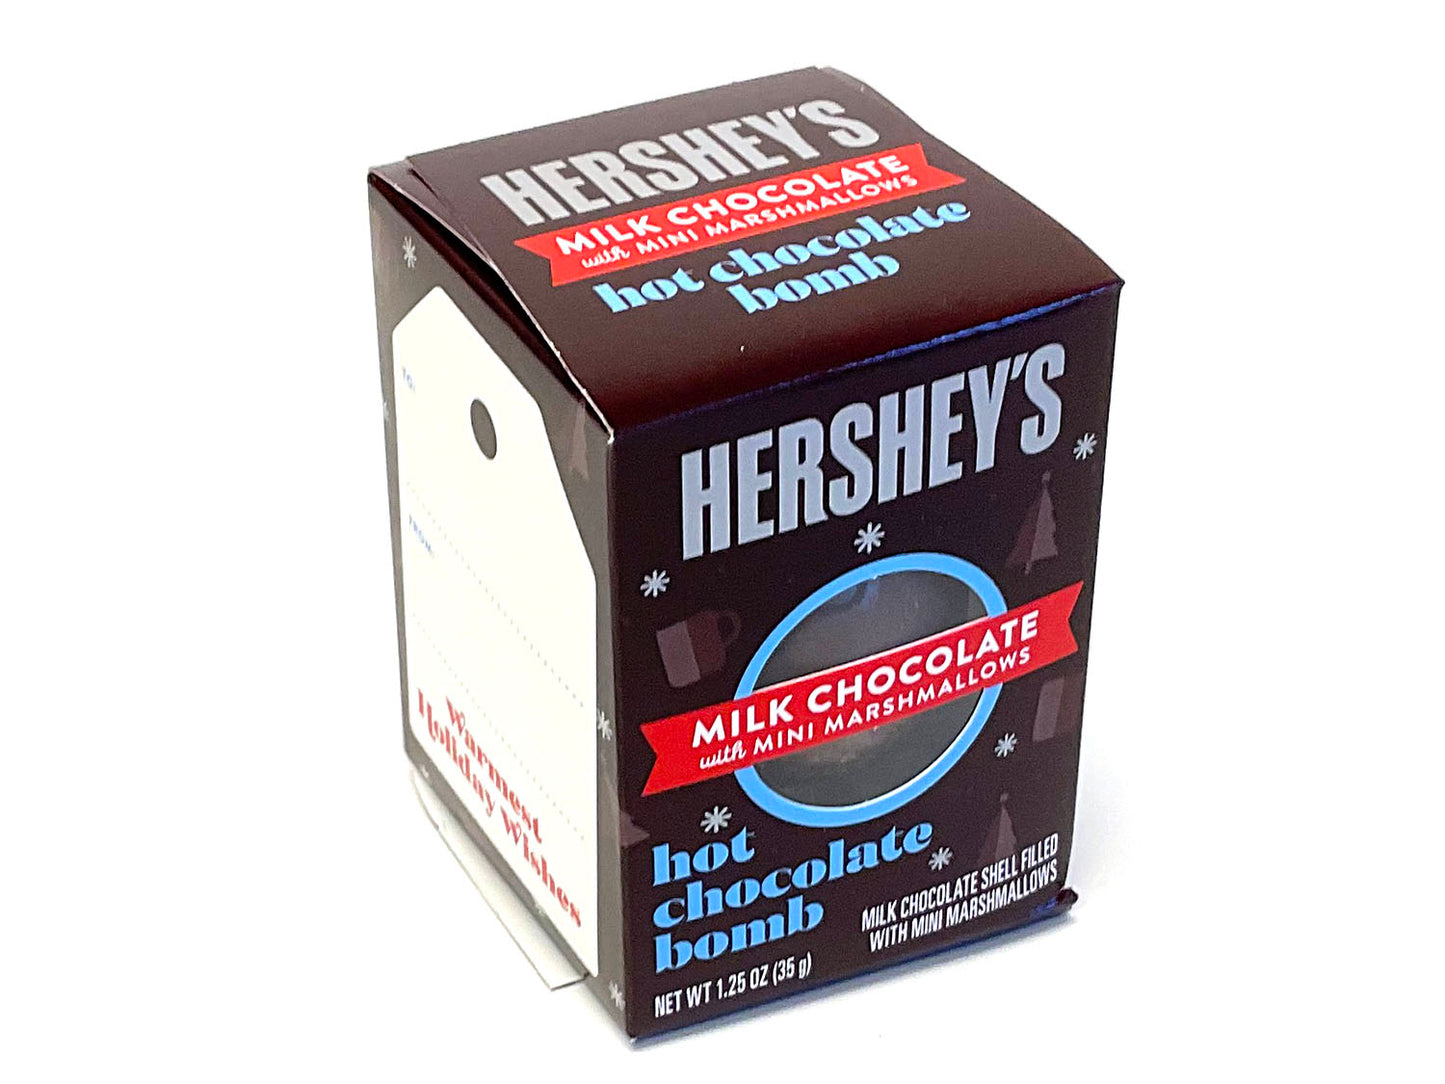 Hershey's Hot Chocolate Bomb - Mini Marshmallow - 1.25 oz